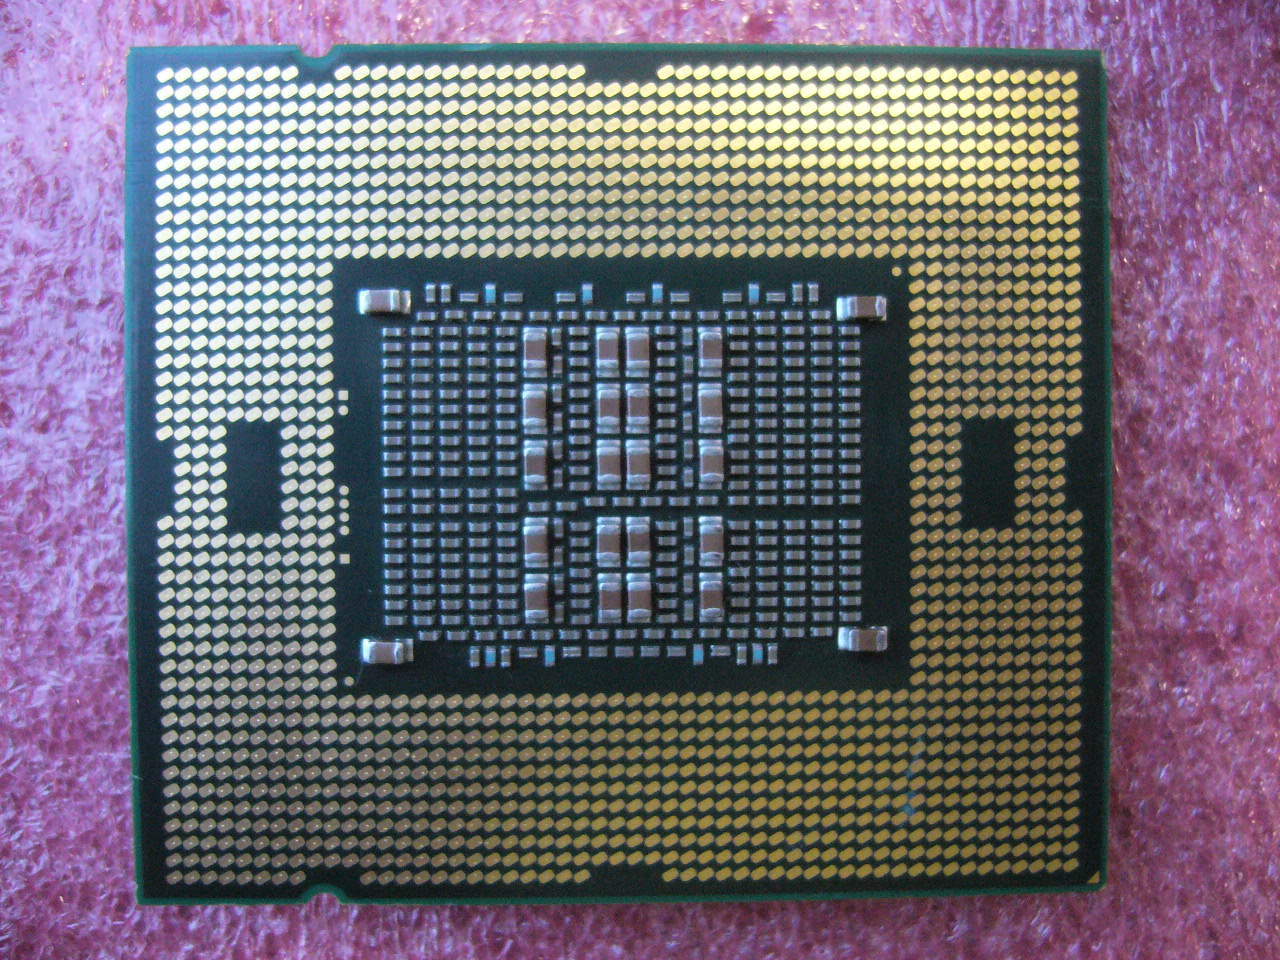 QTY 1x INTEL Eight-Cores CPU E7-4820 2.00GHZ/18MB 5.86GT/s QPI LGA1567 SLC3G - Click Image to Close